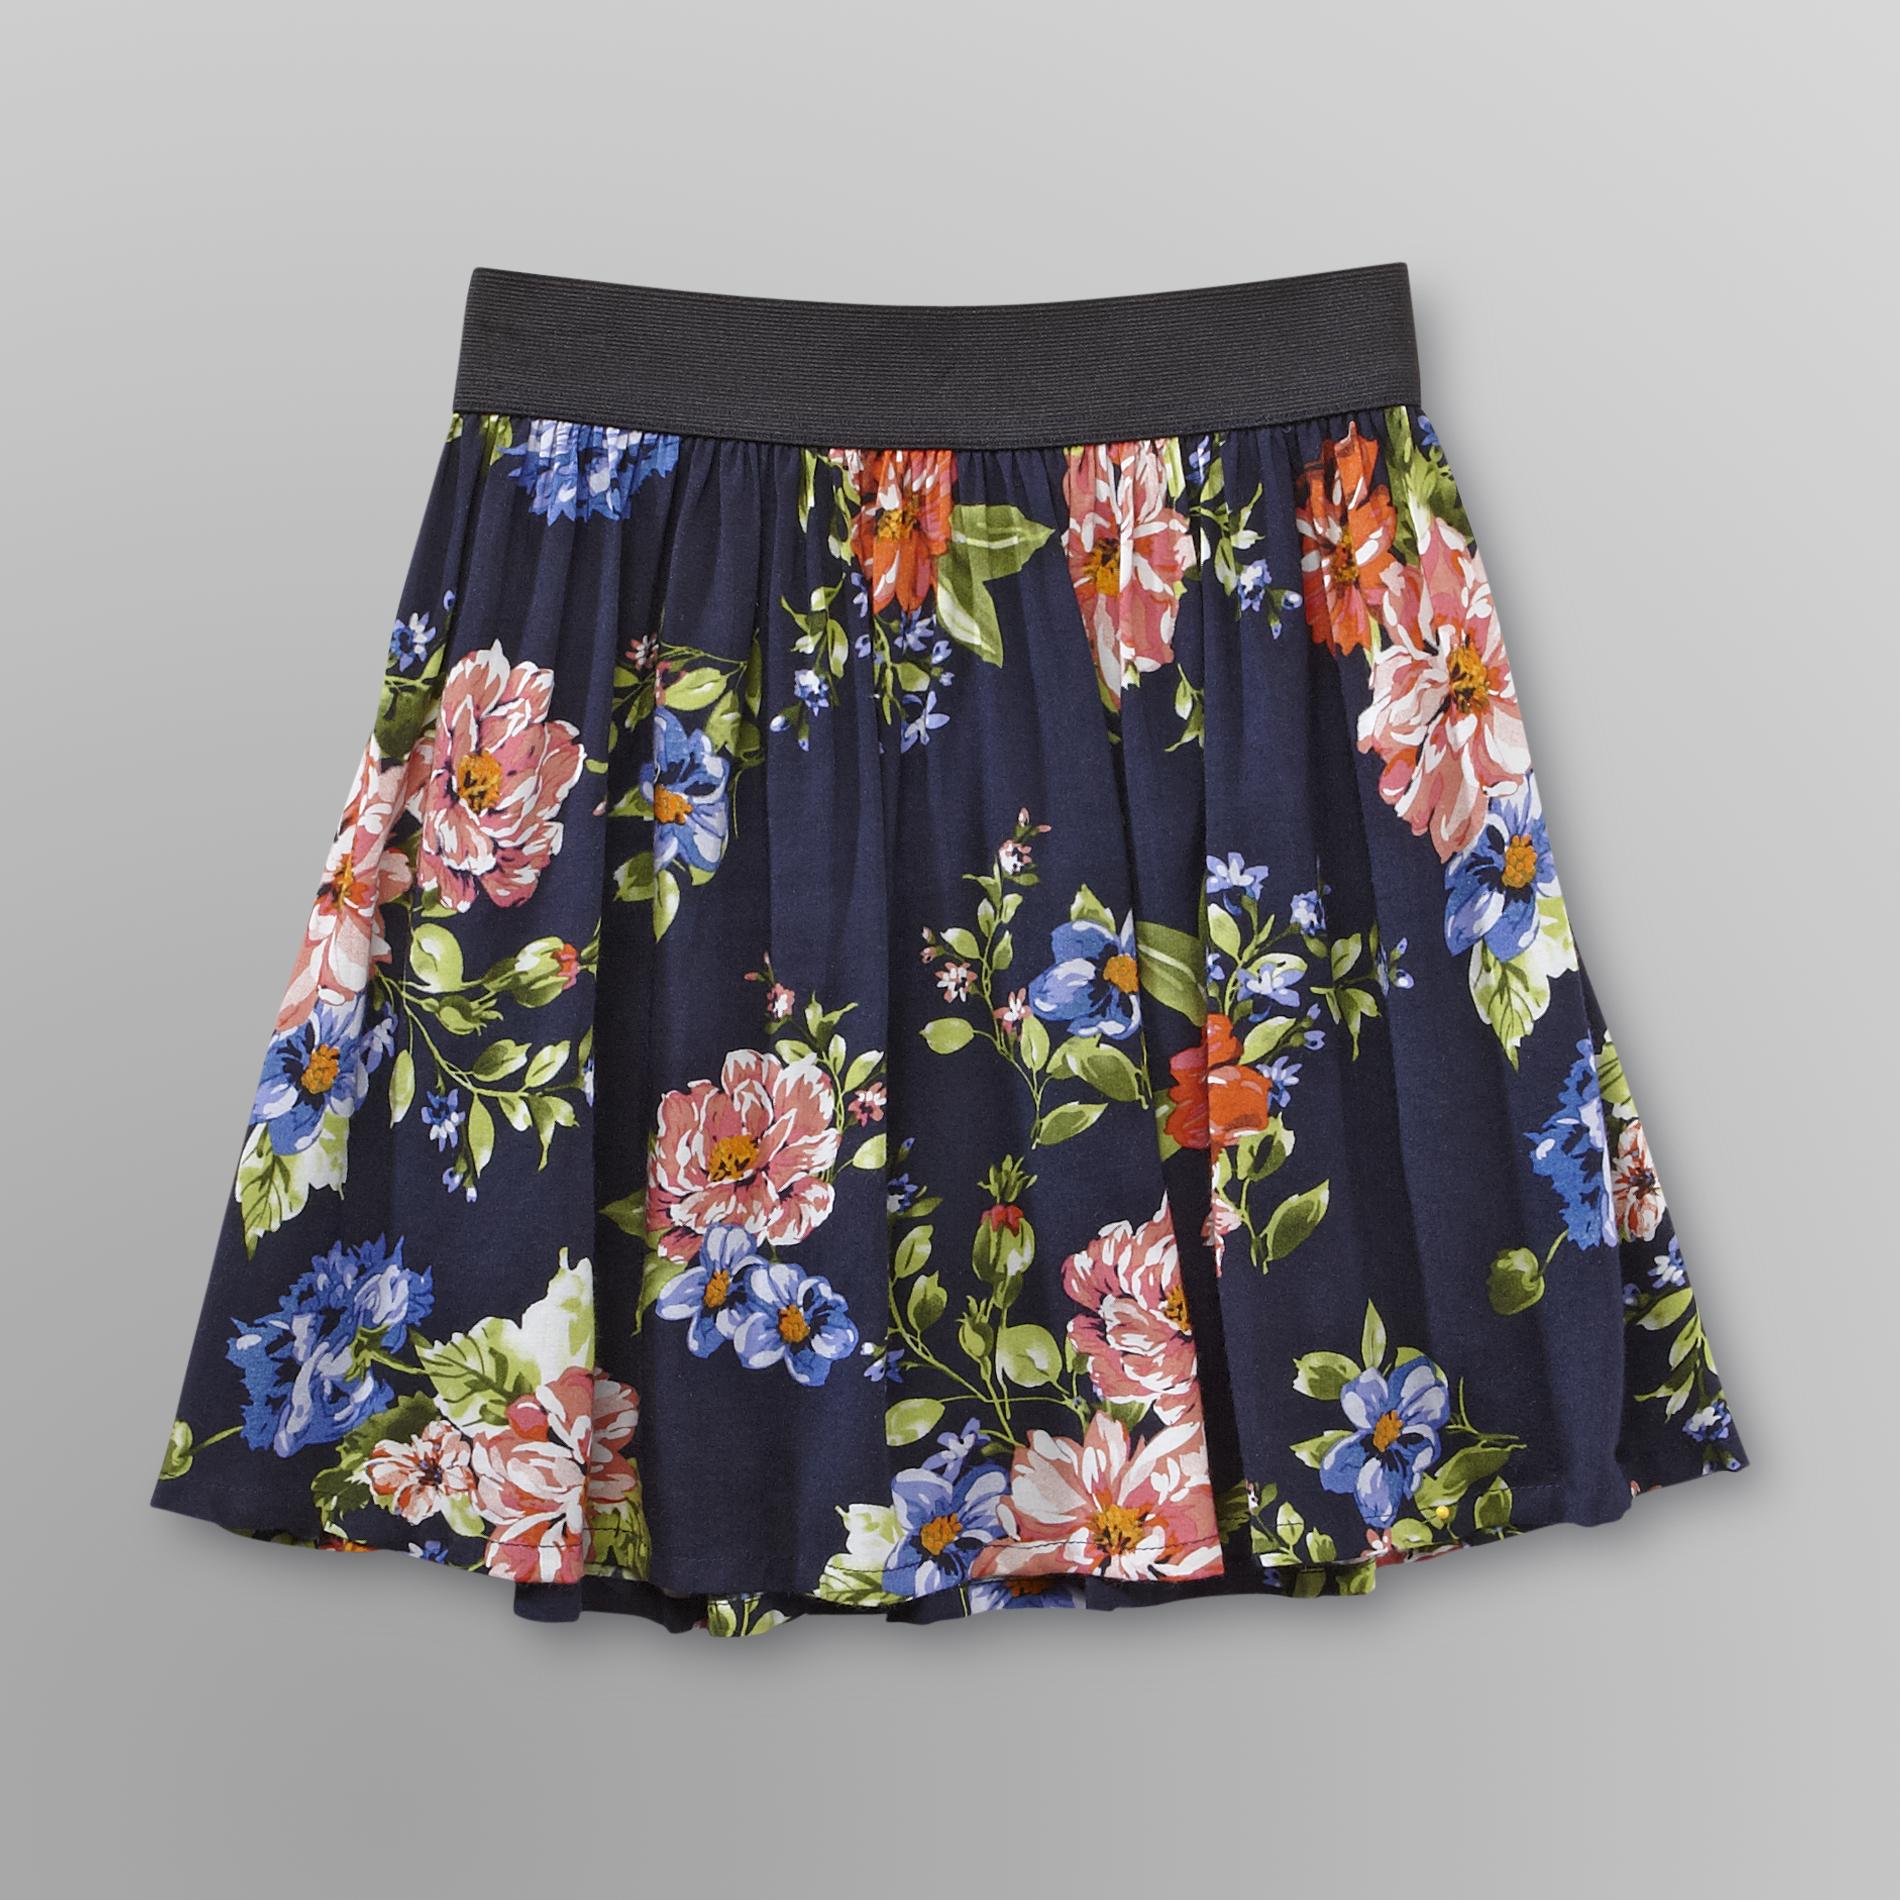 Bongo Junior's Skirt - Floral Print